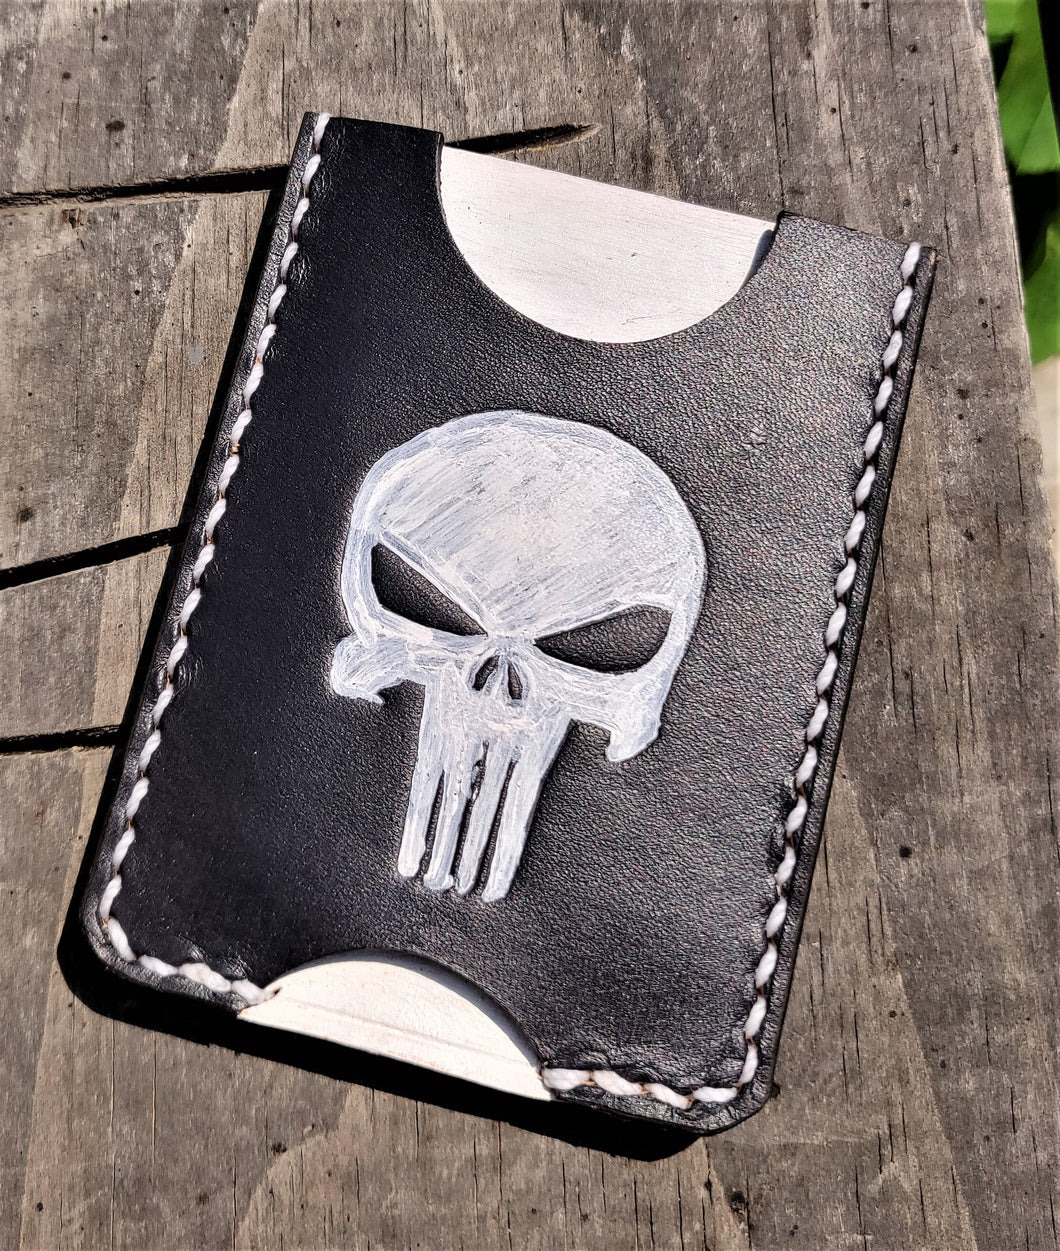 Handmade Leather Minimalist Wallet MINUS Black White Punisher